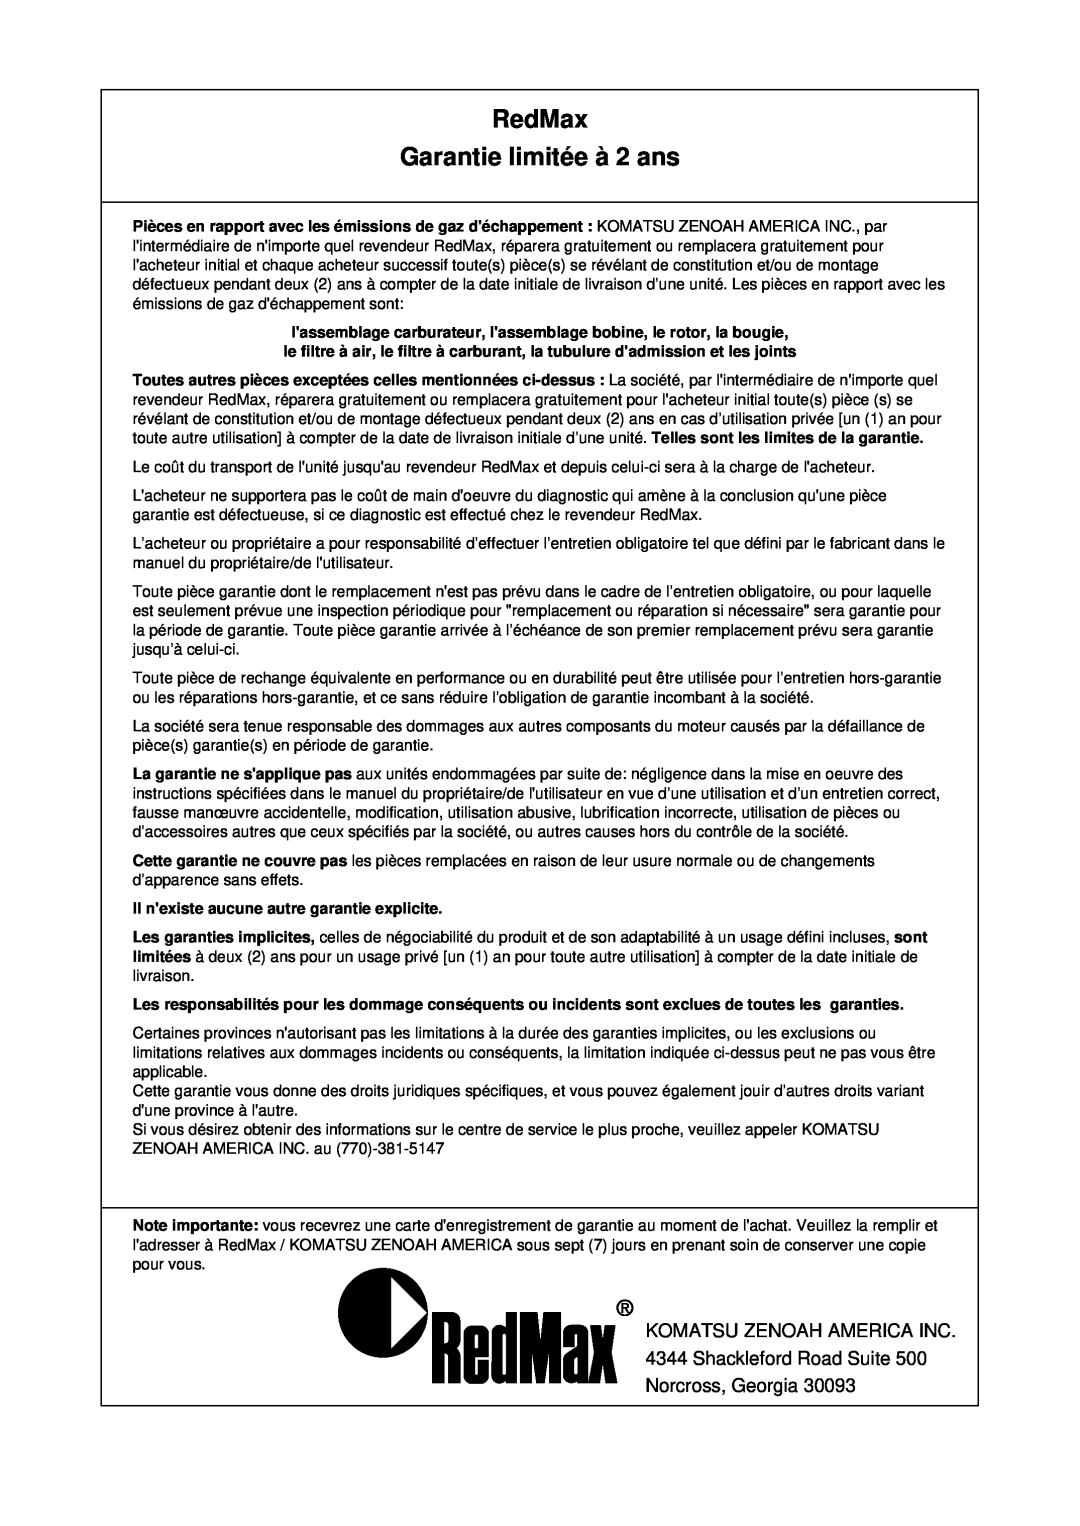 RedMax EB7001RH manual RedMax Garantie limitée à 2 ans 